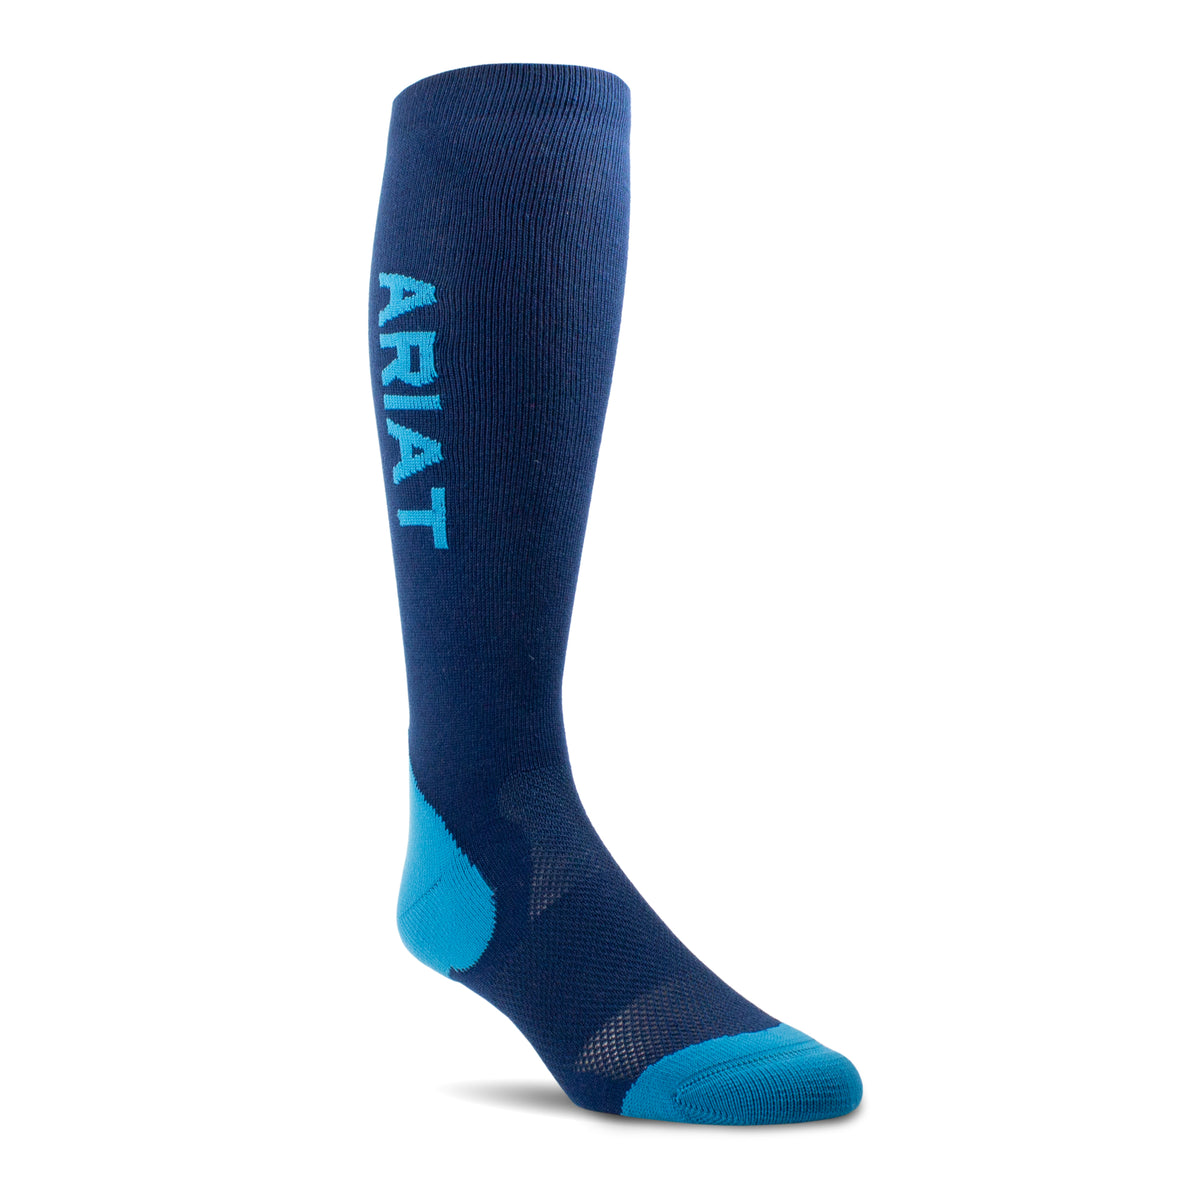 Ariat Uni Ariattek Slimline Performance Socks - Navy/Mosaic Blue